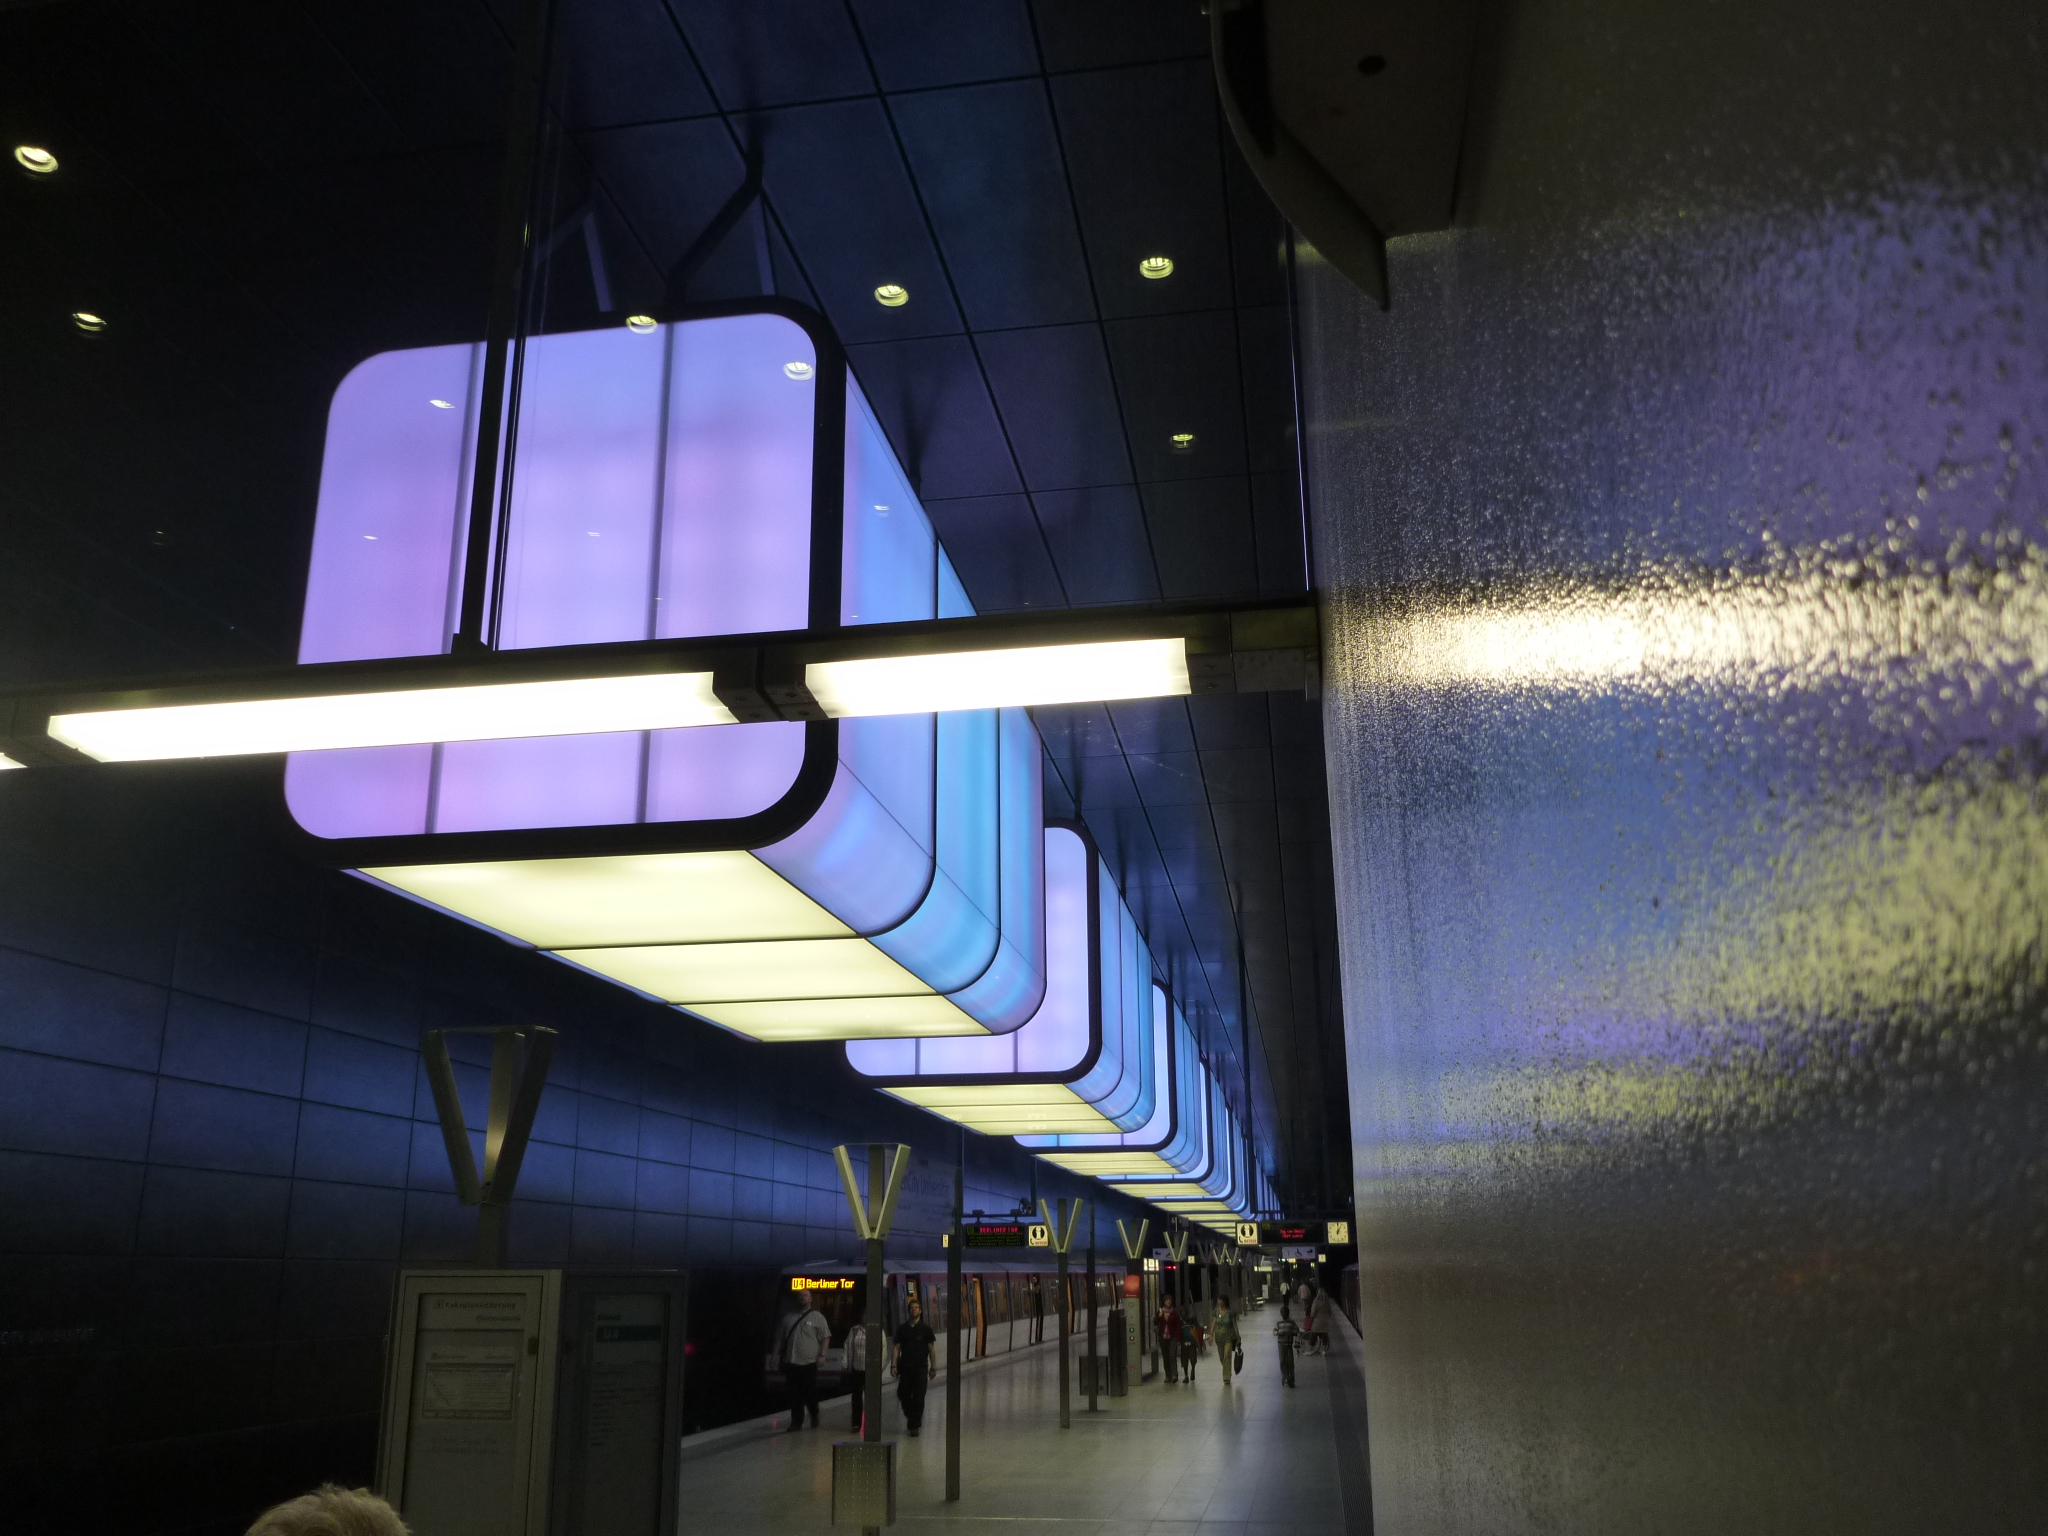 Haltestelle U4 - Hafencity Universität - Illumination